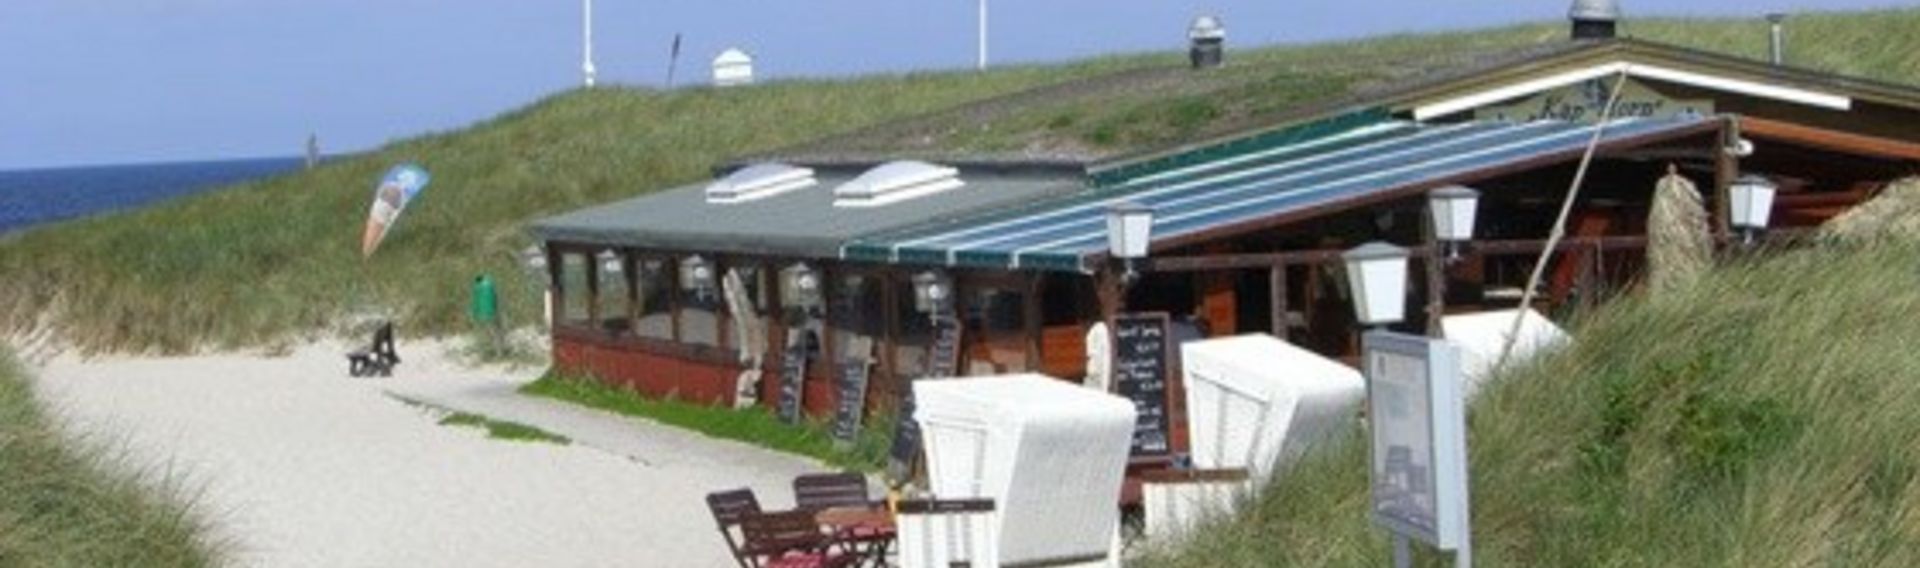 Restaurant in den Dünen Sylt – Kap Horn